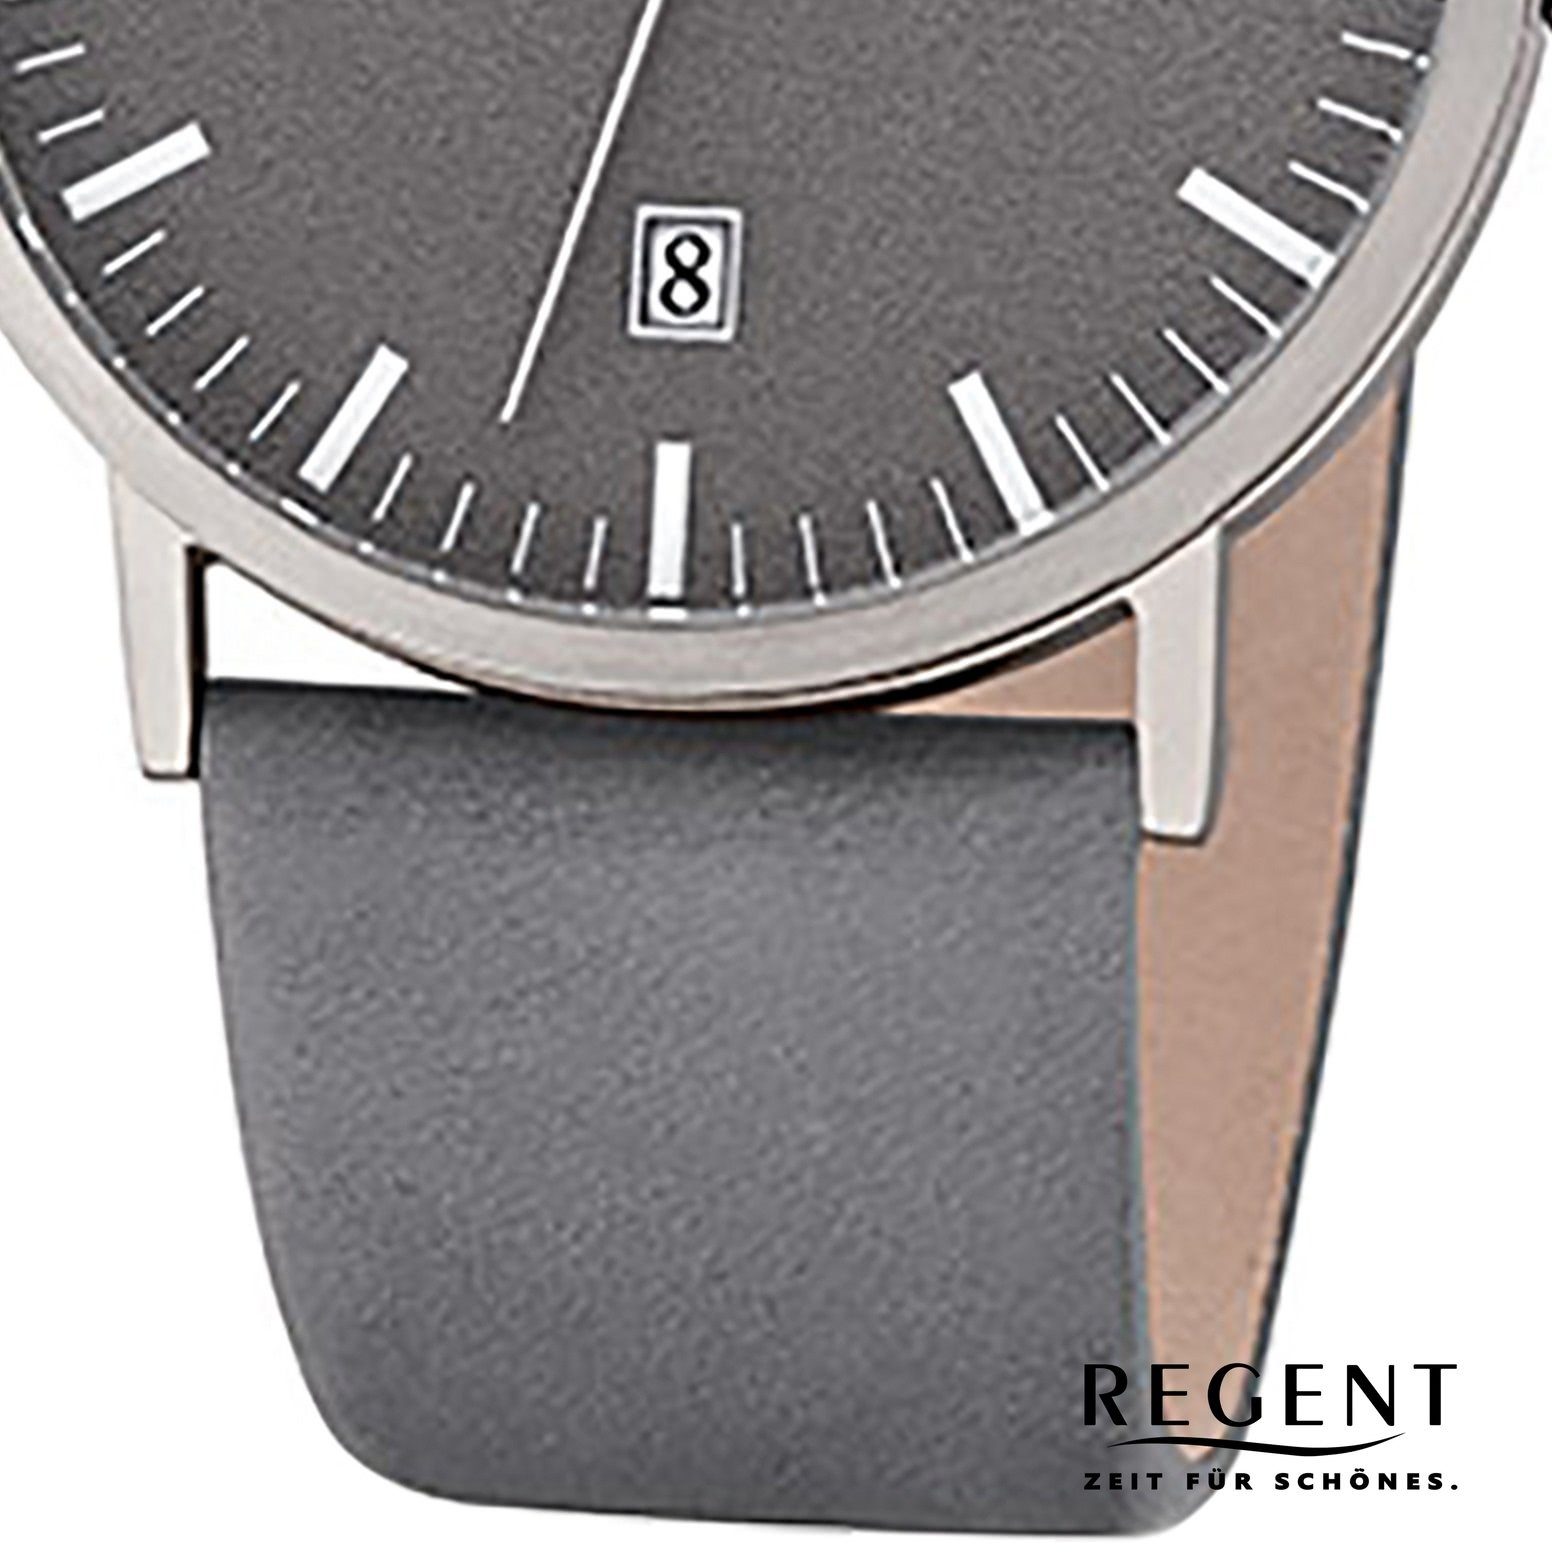 Lederarmband (ca. Regent Herren Leder F-1234 Regent Herren 39mm), Uhr Quarzuhr Armbanduhr Quarzwerk, mittel rund, grau